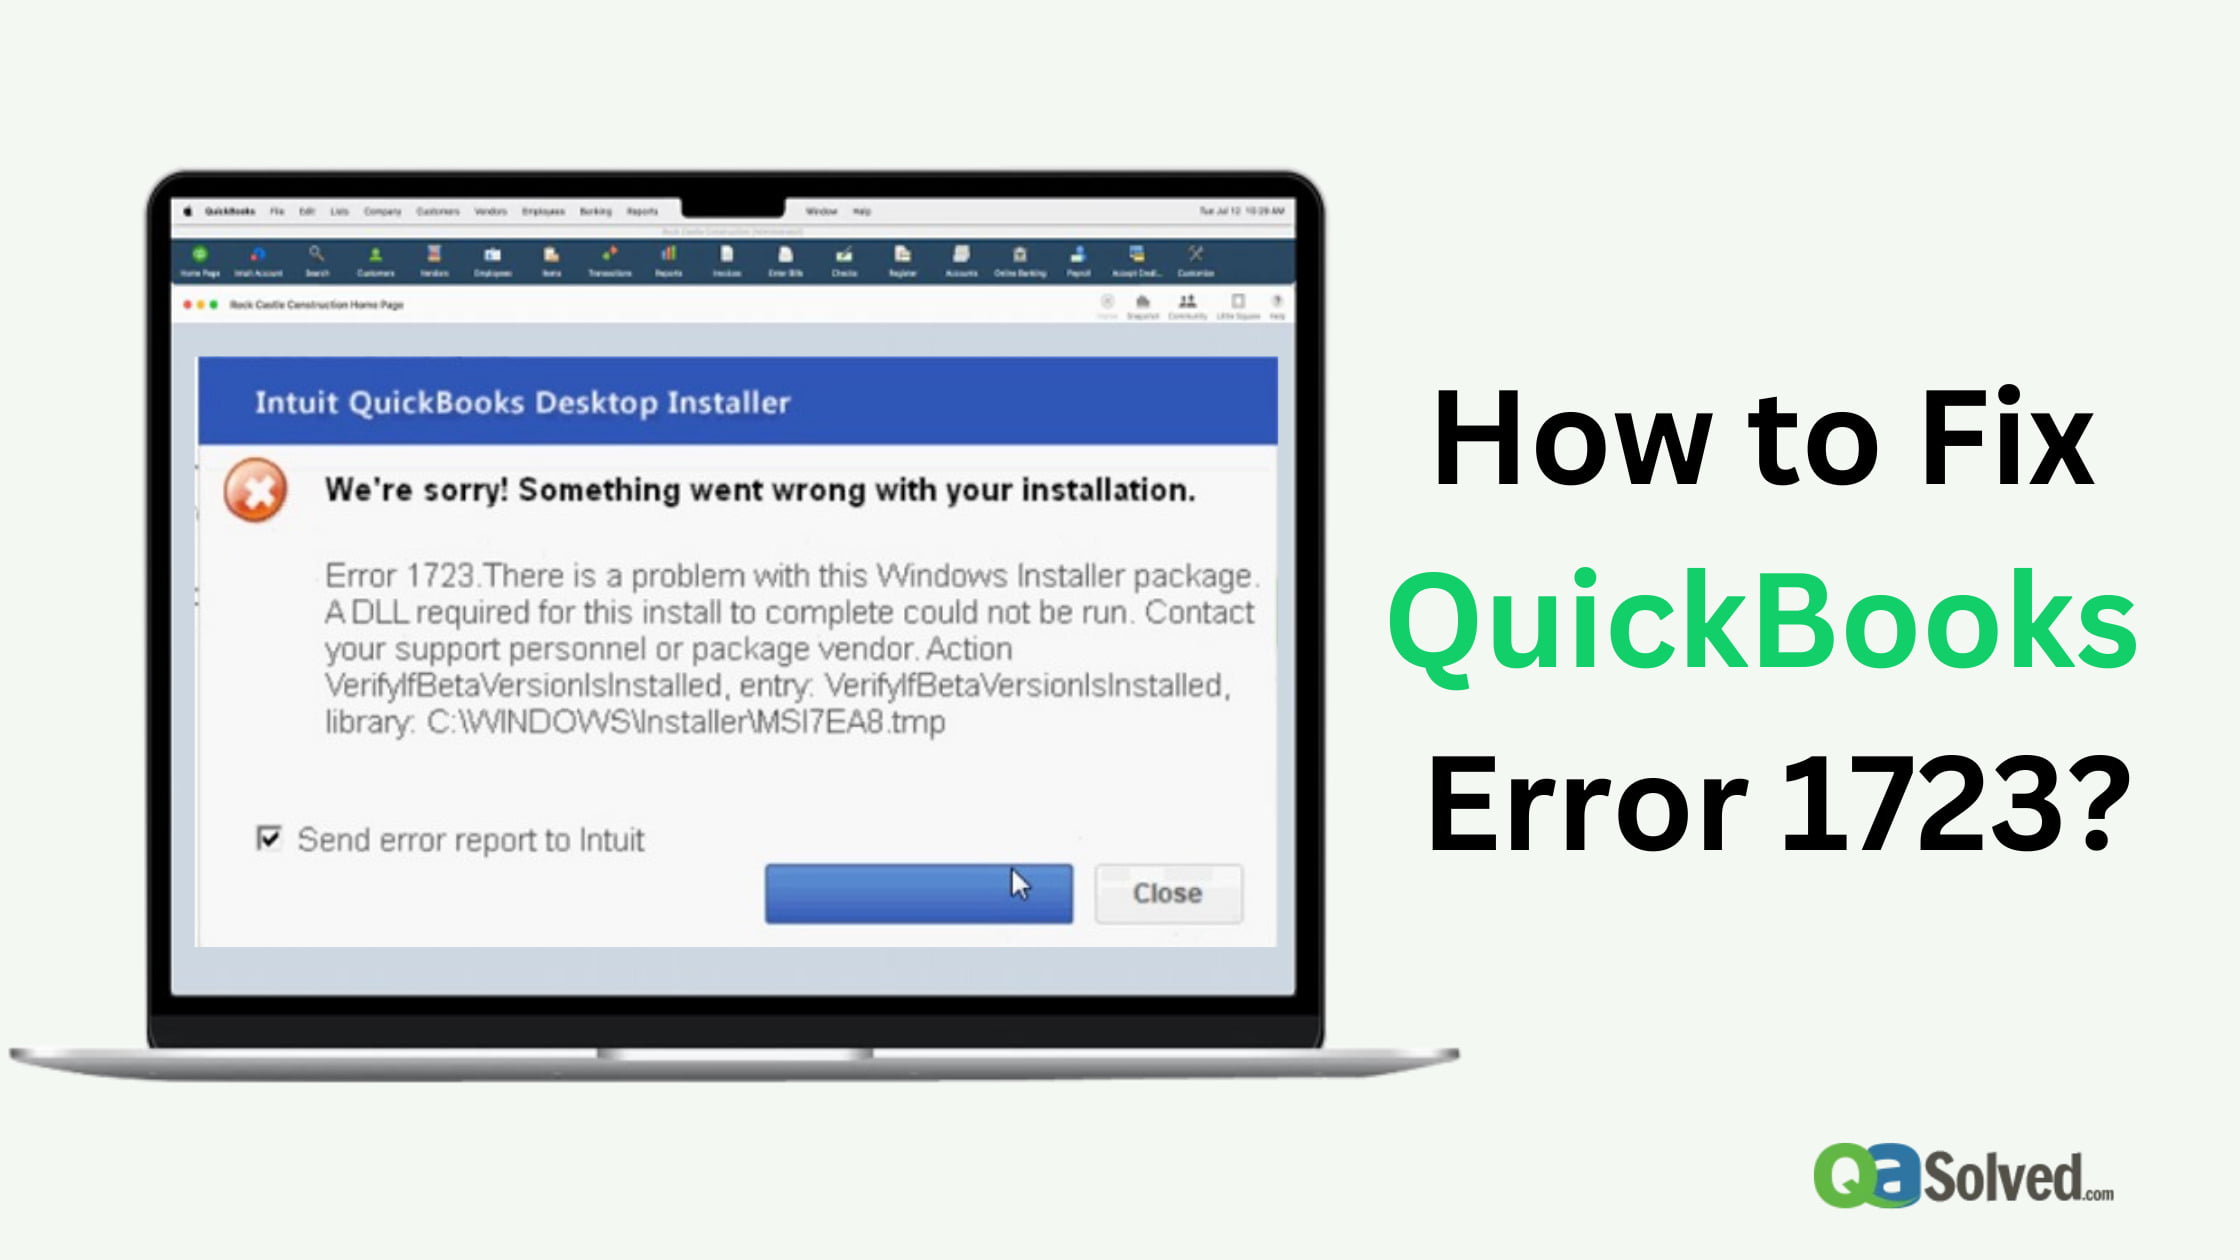 How to Fix QuickBooks Error 1723?